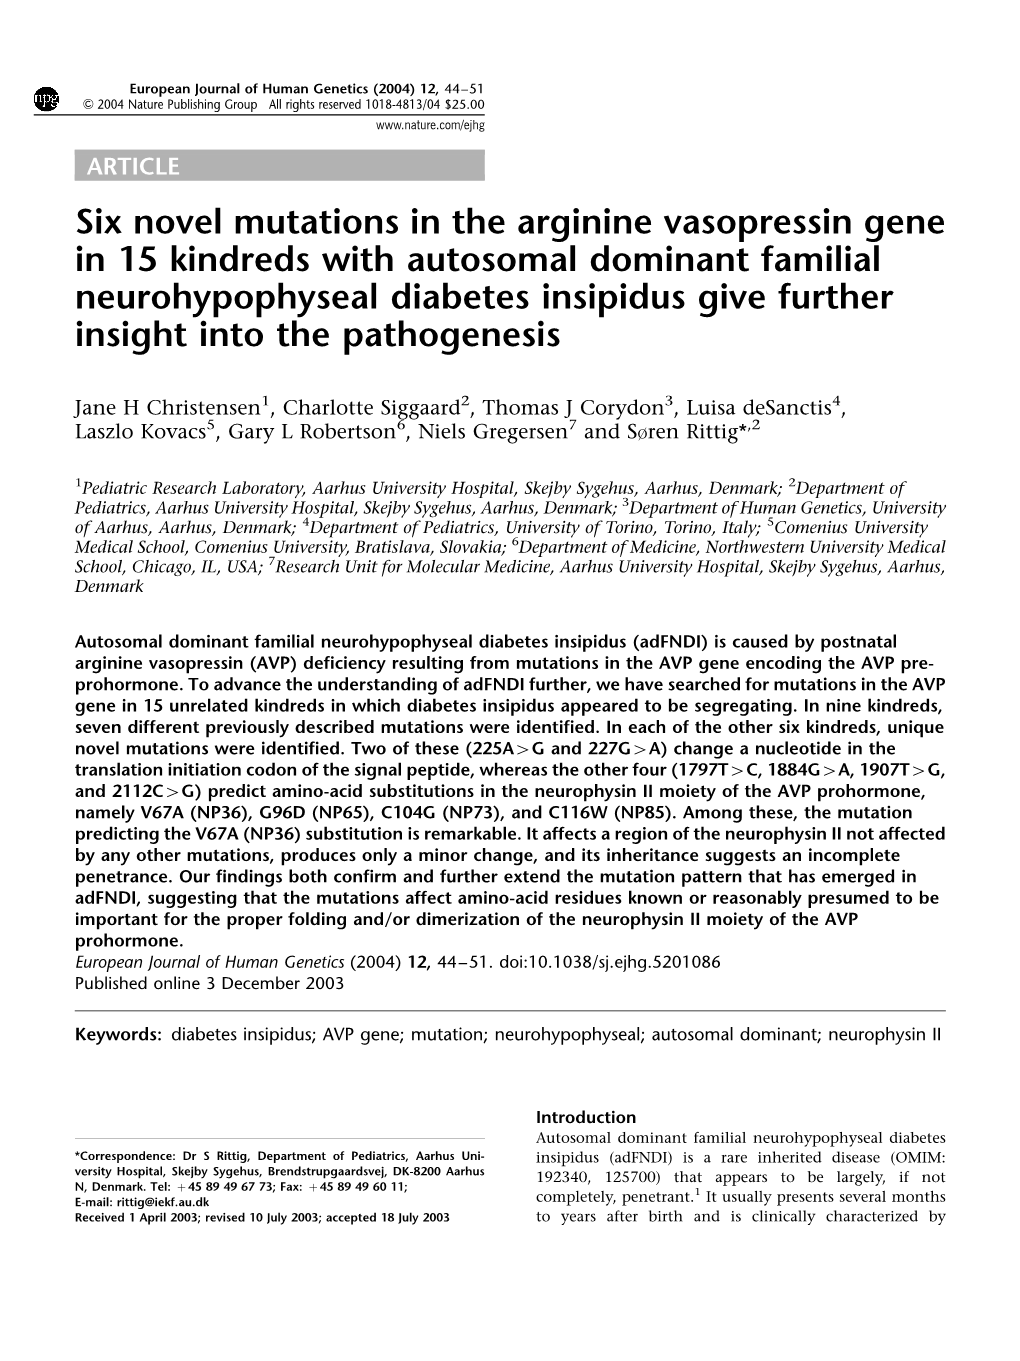 Six Novel Mutations in the Arginine Vasopressin Gene in 15 Kindreds